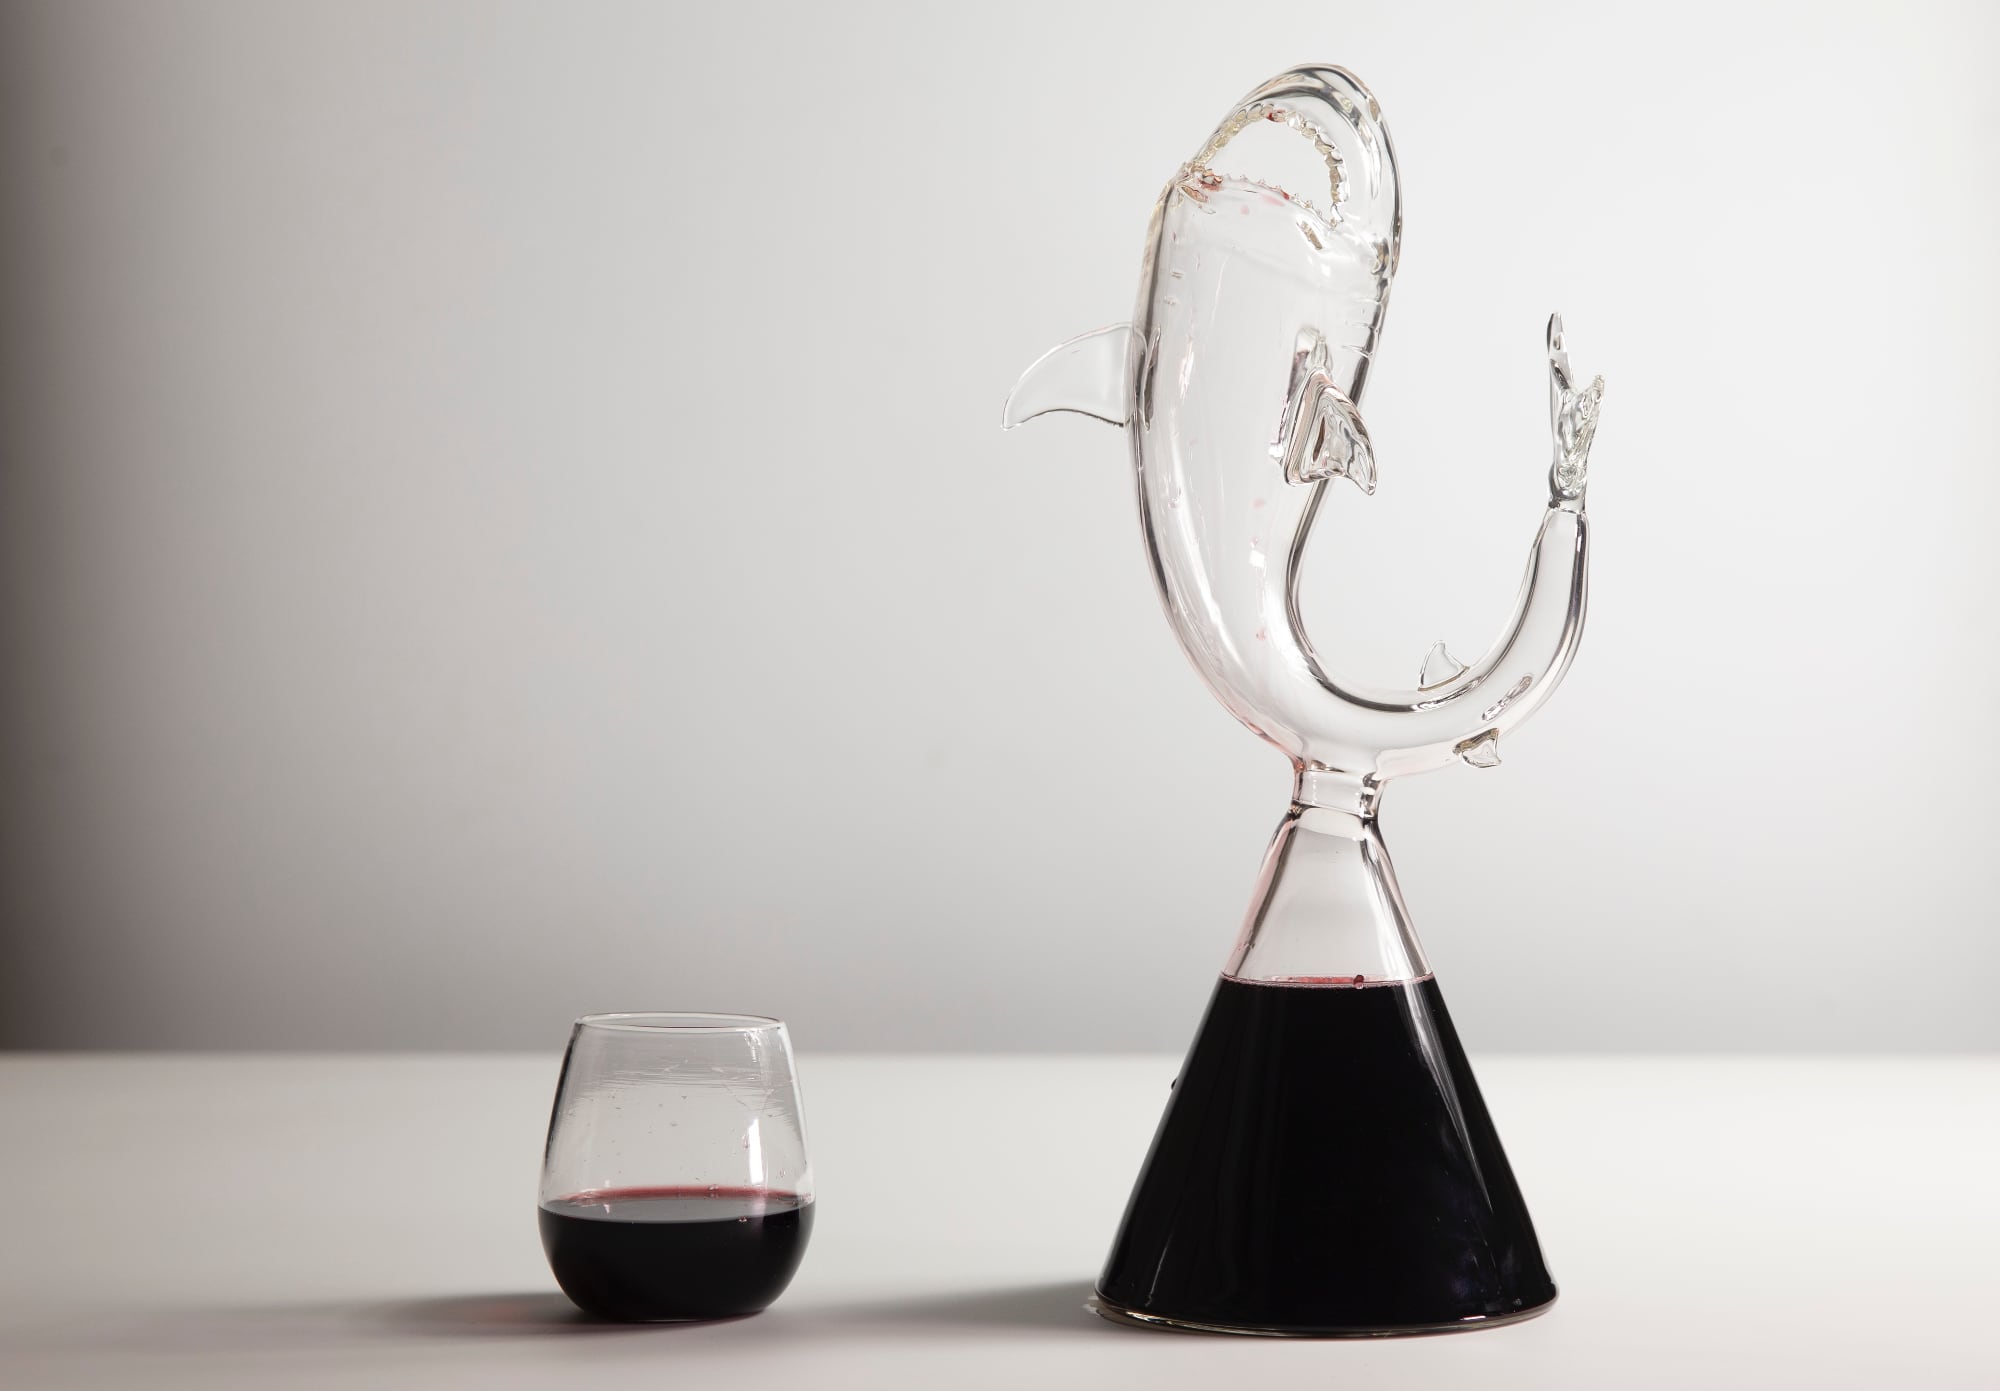 decantador de vino en vidrio tiburoncharlie matz detalle